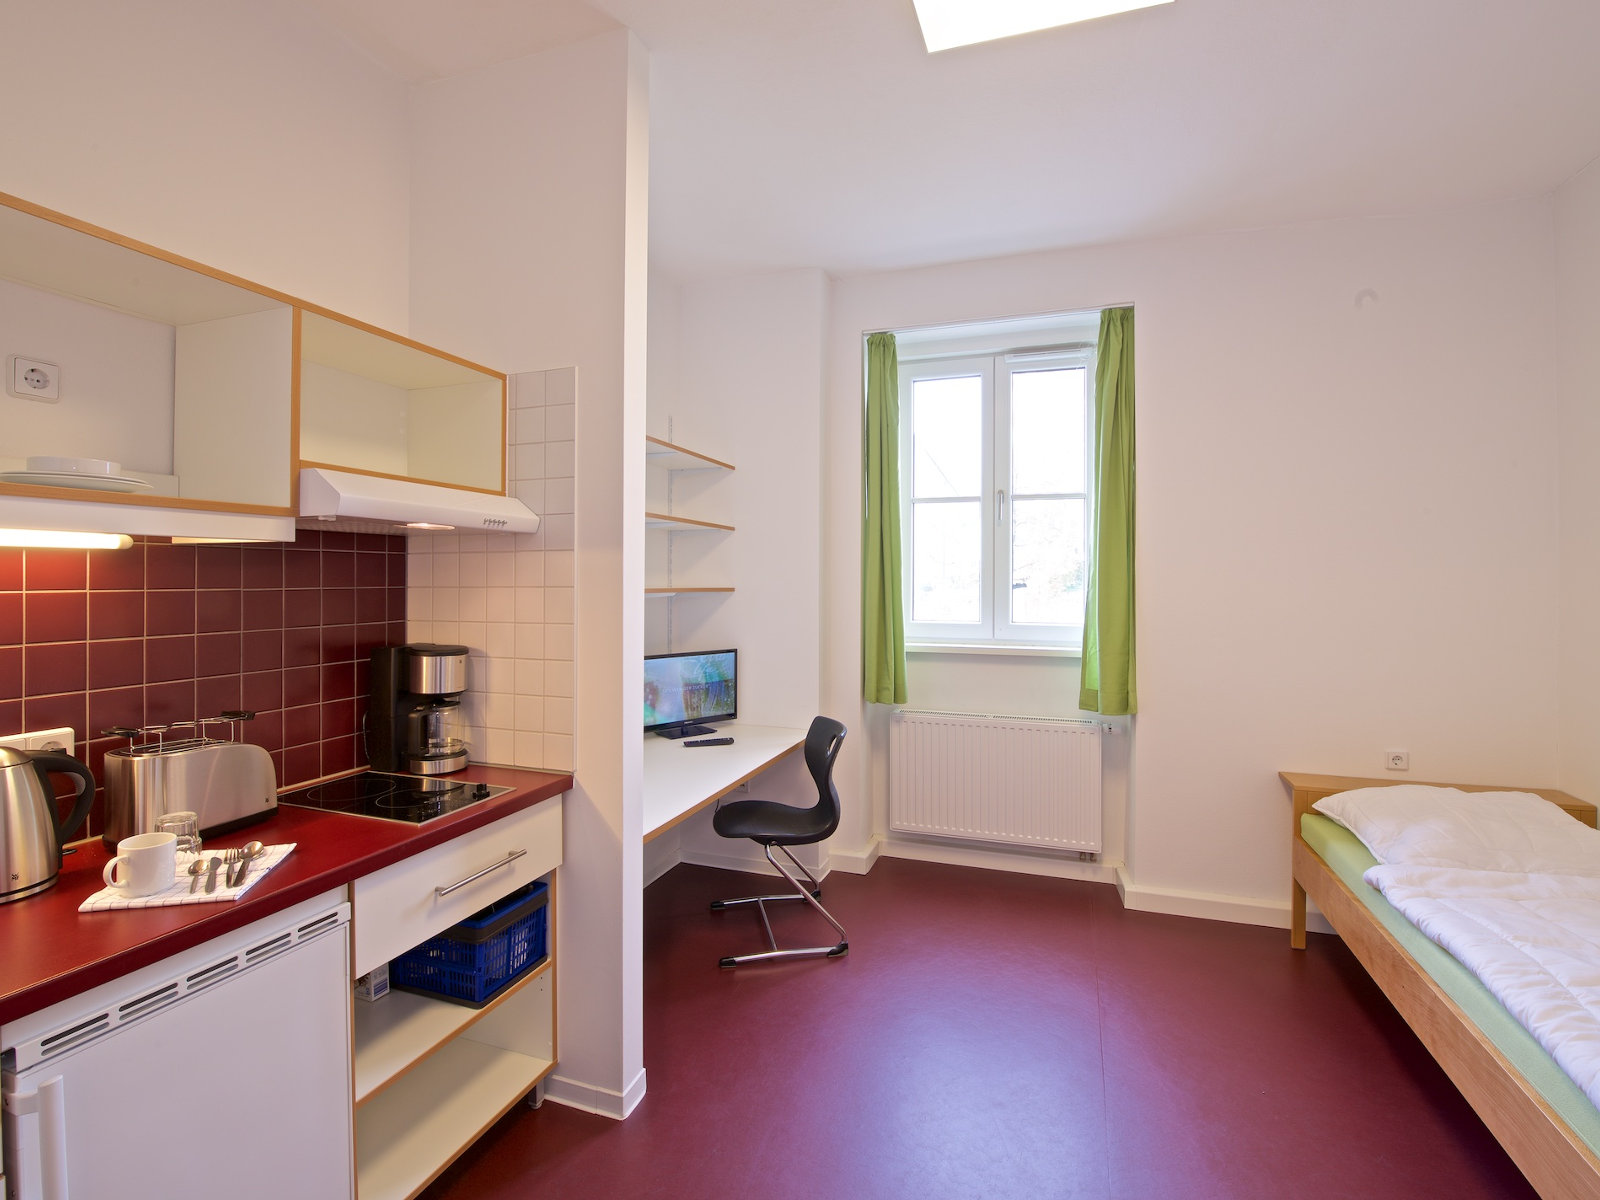 One-room flat or apartment in Zittau